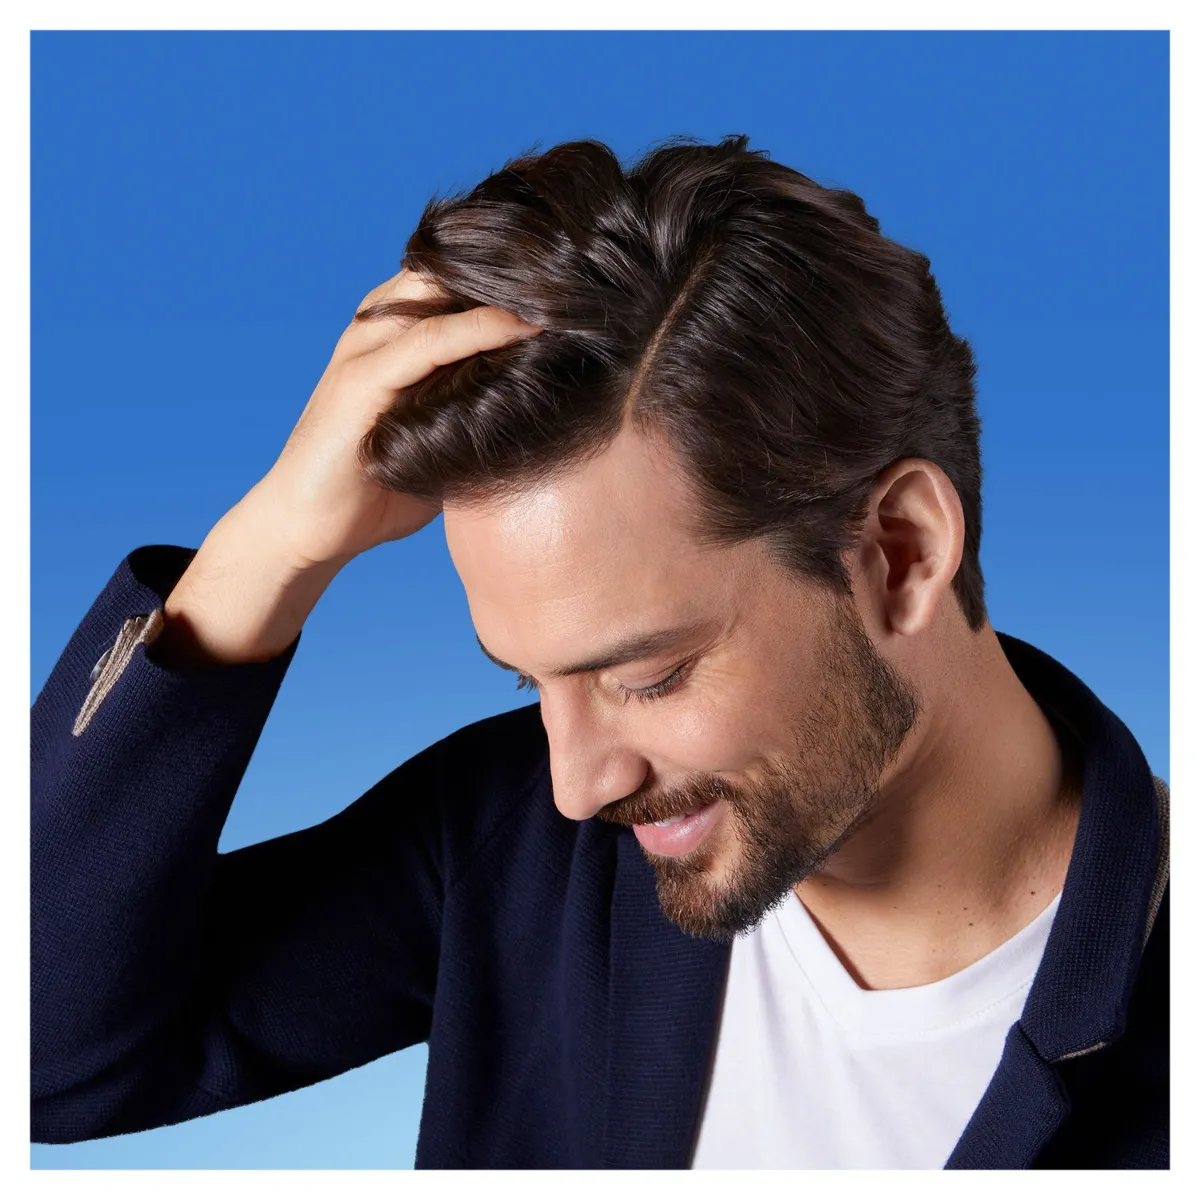 Head&Shoulders Anti-Hair Fall šampon proti lupům 400 ml